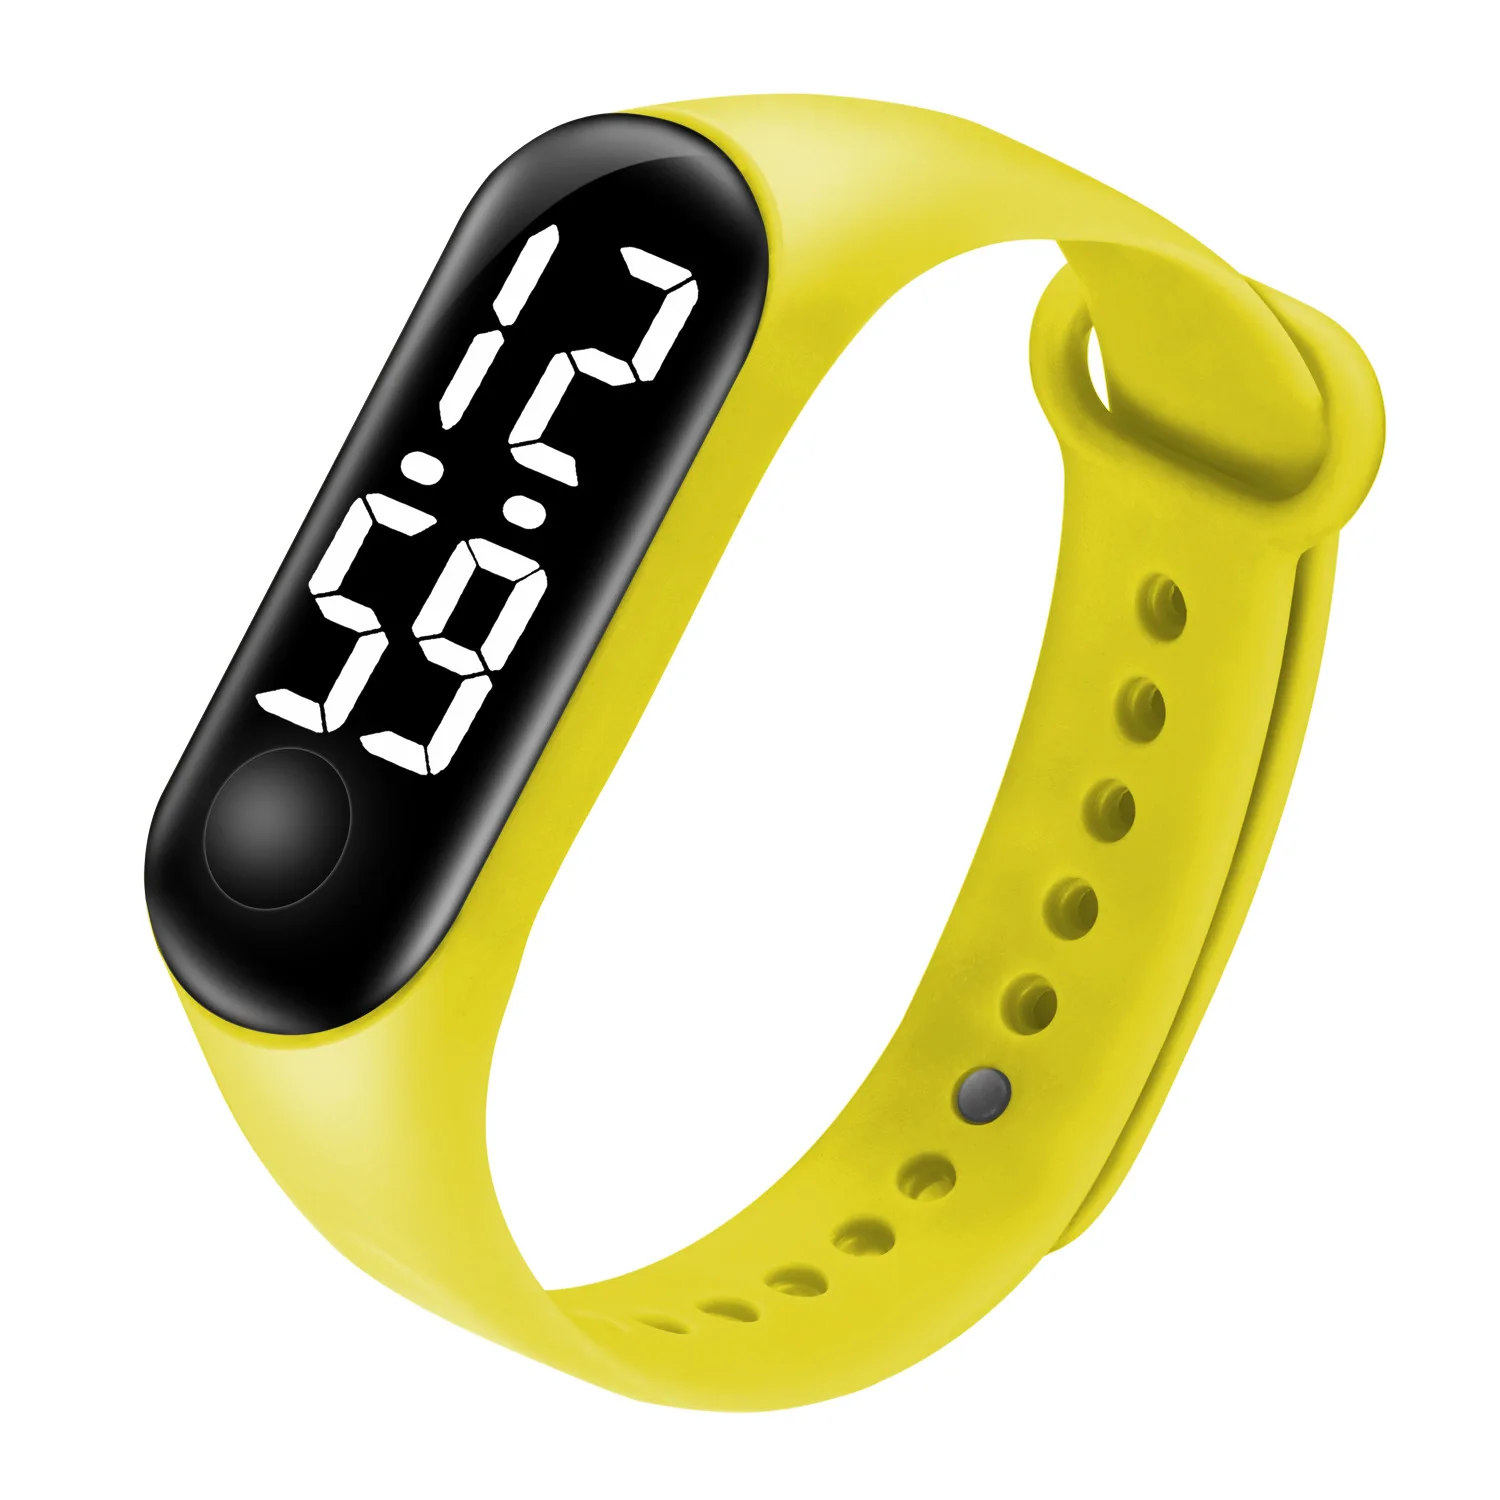 New M3 electronic watch fashion student couple deep waterproof leisure sports touch LED electronic watch bracelet